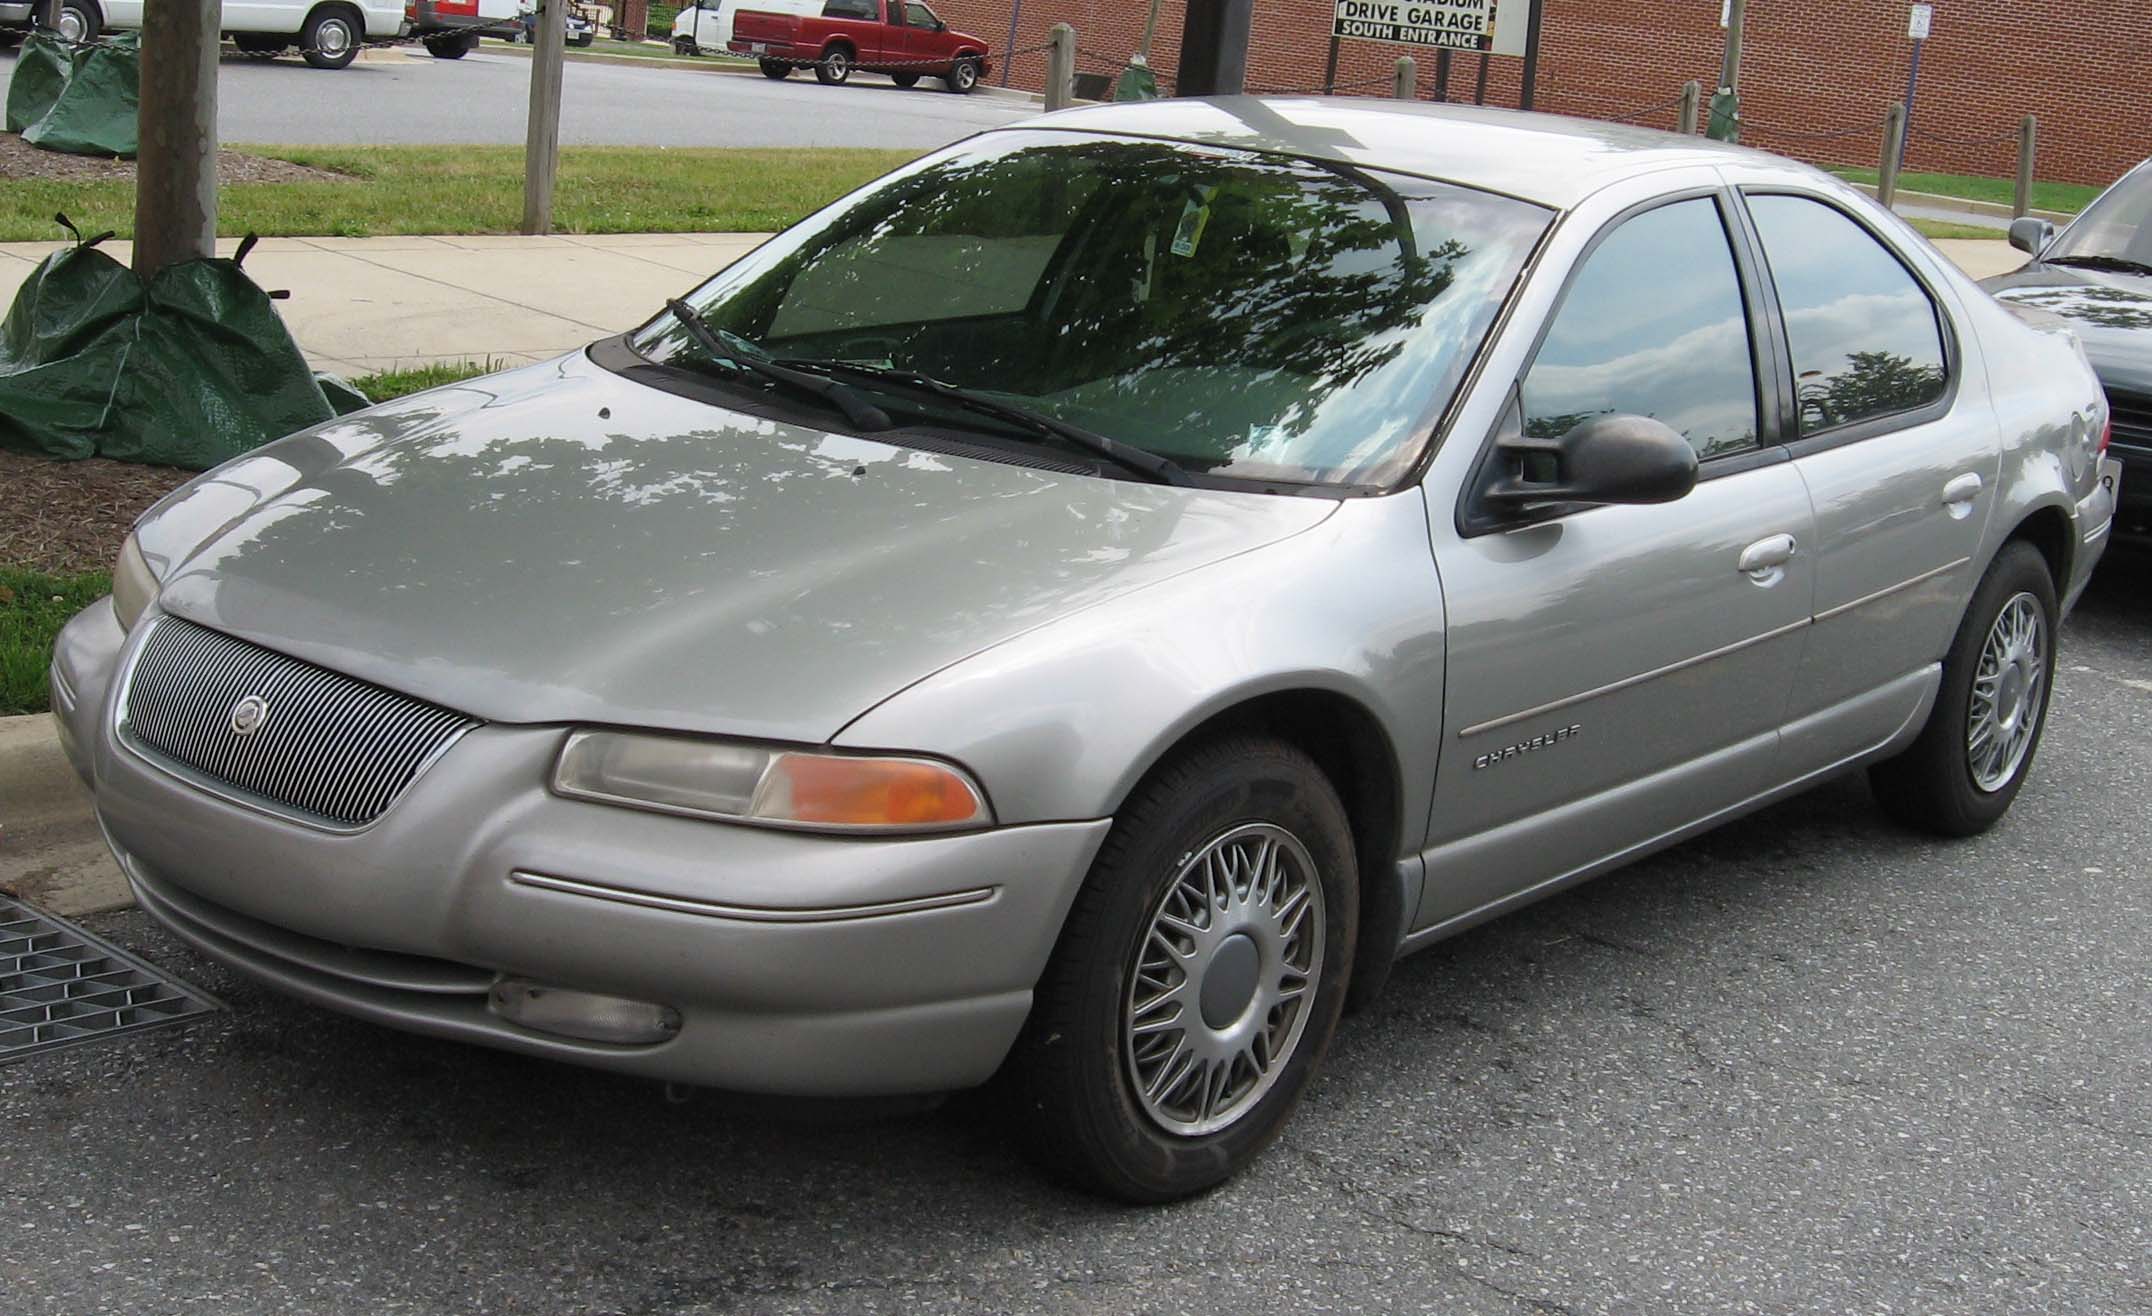 File:1995-1998 Chrysler Cirrus.jpg - Wikimedia Commons